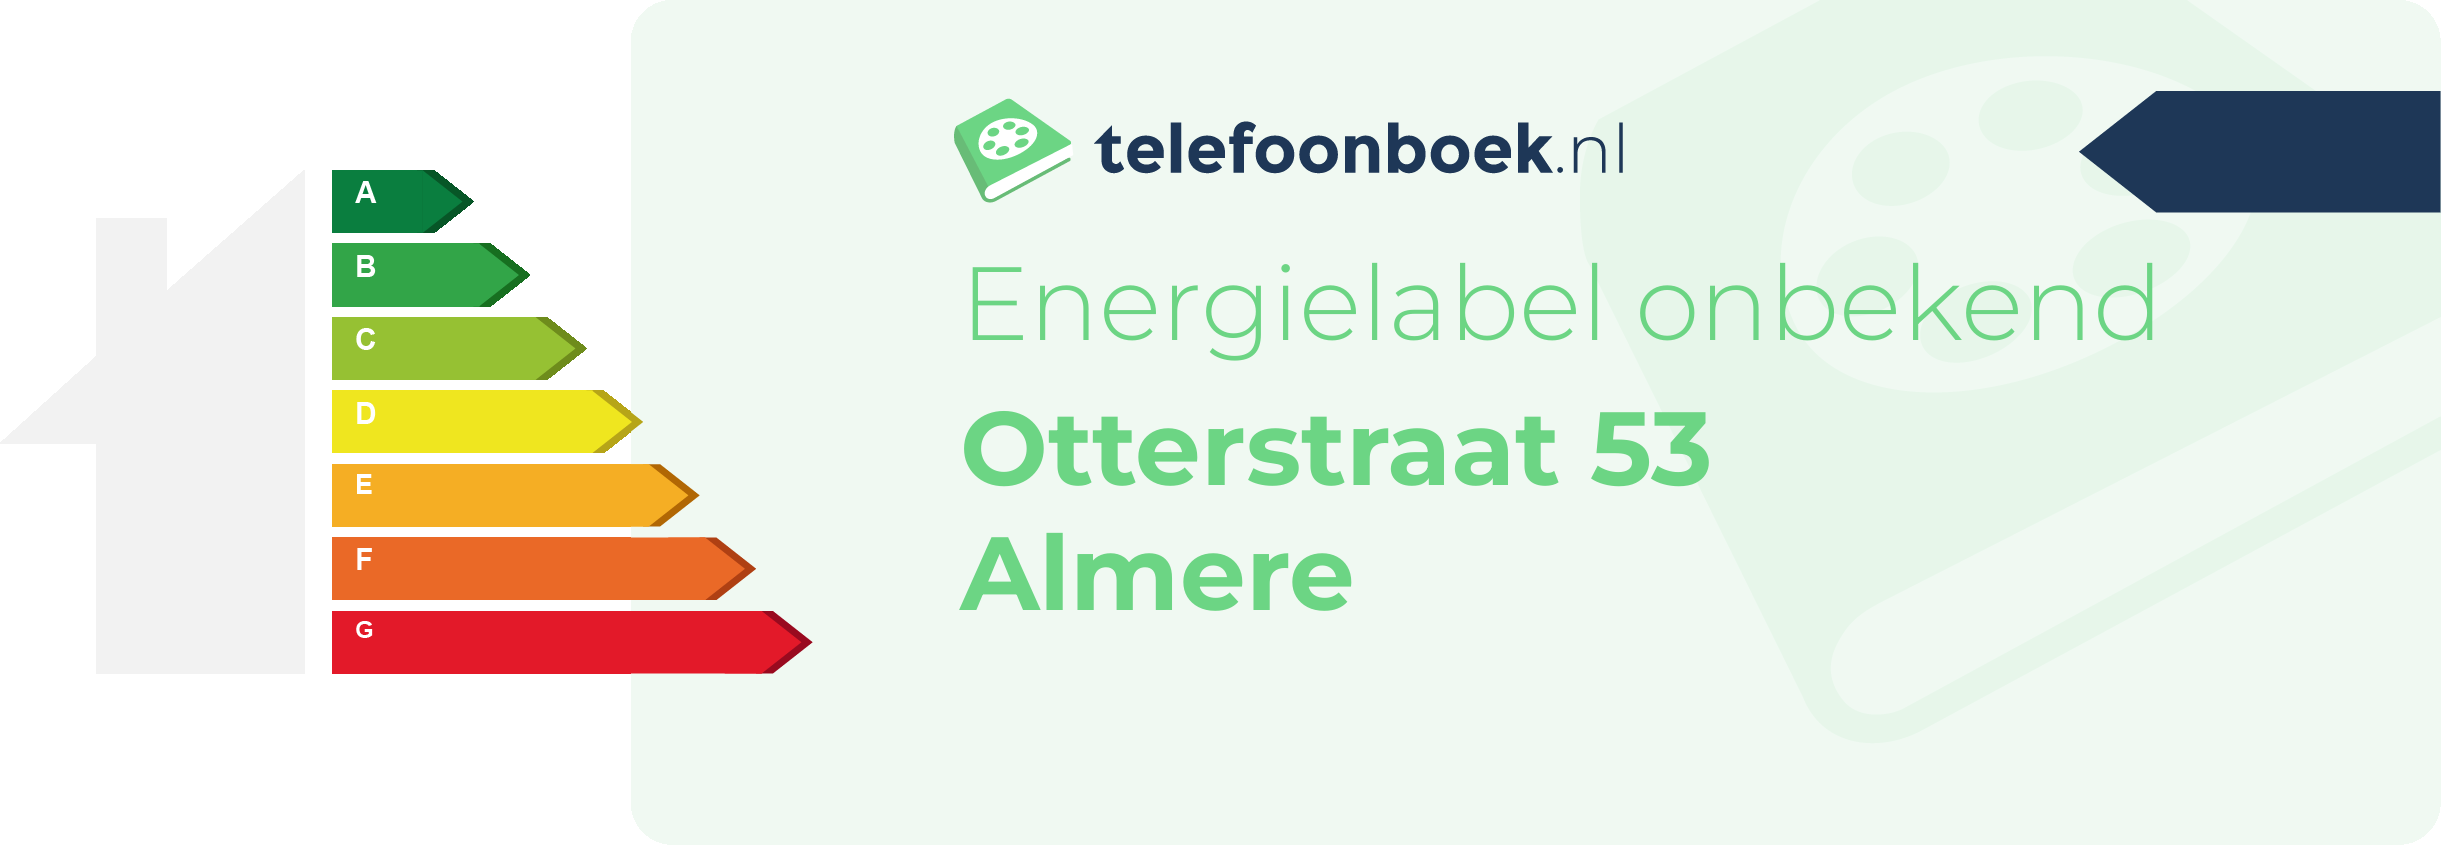 Energielabel Otterstraat 53 Almere